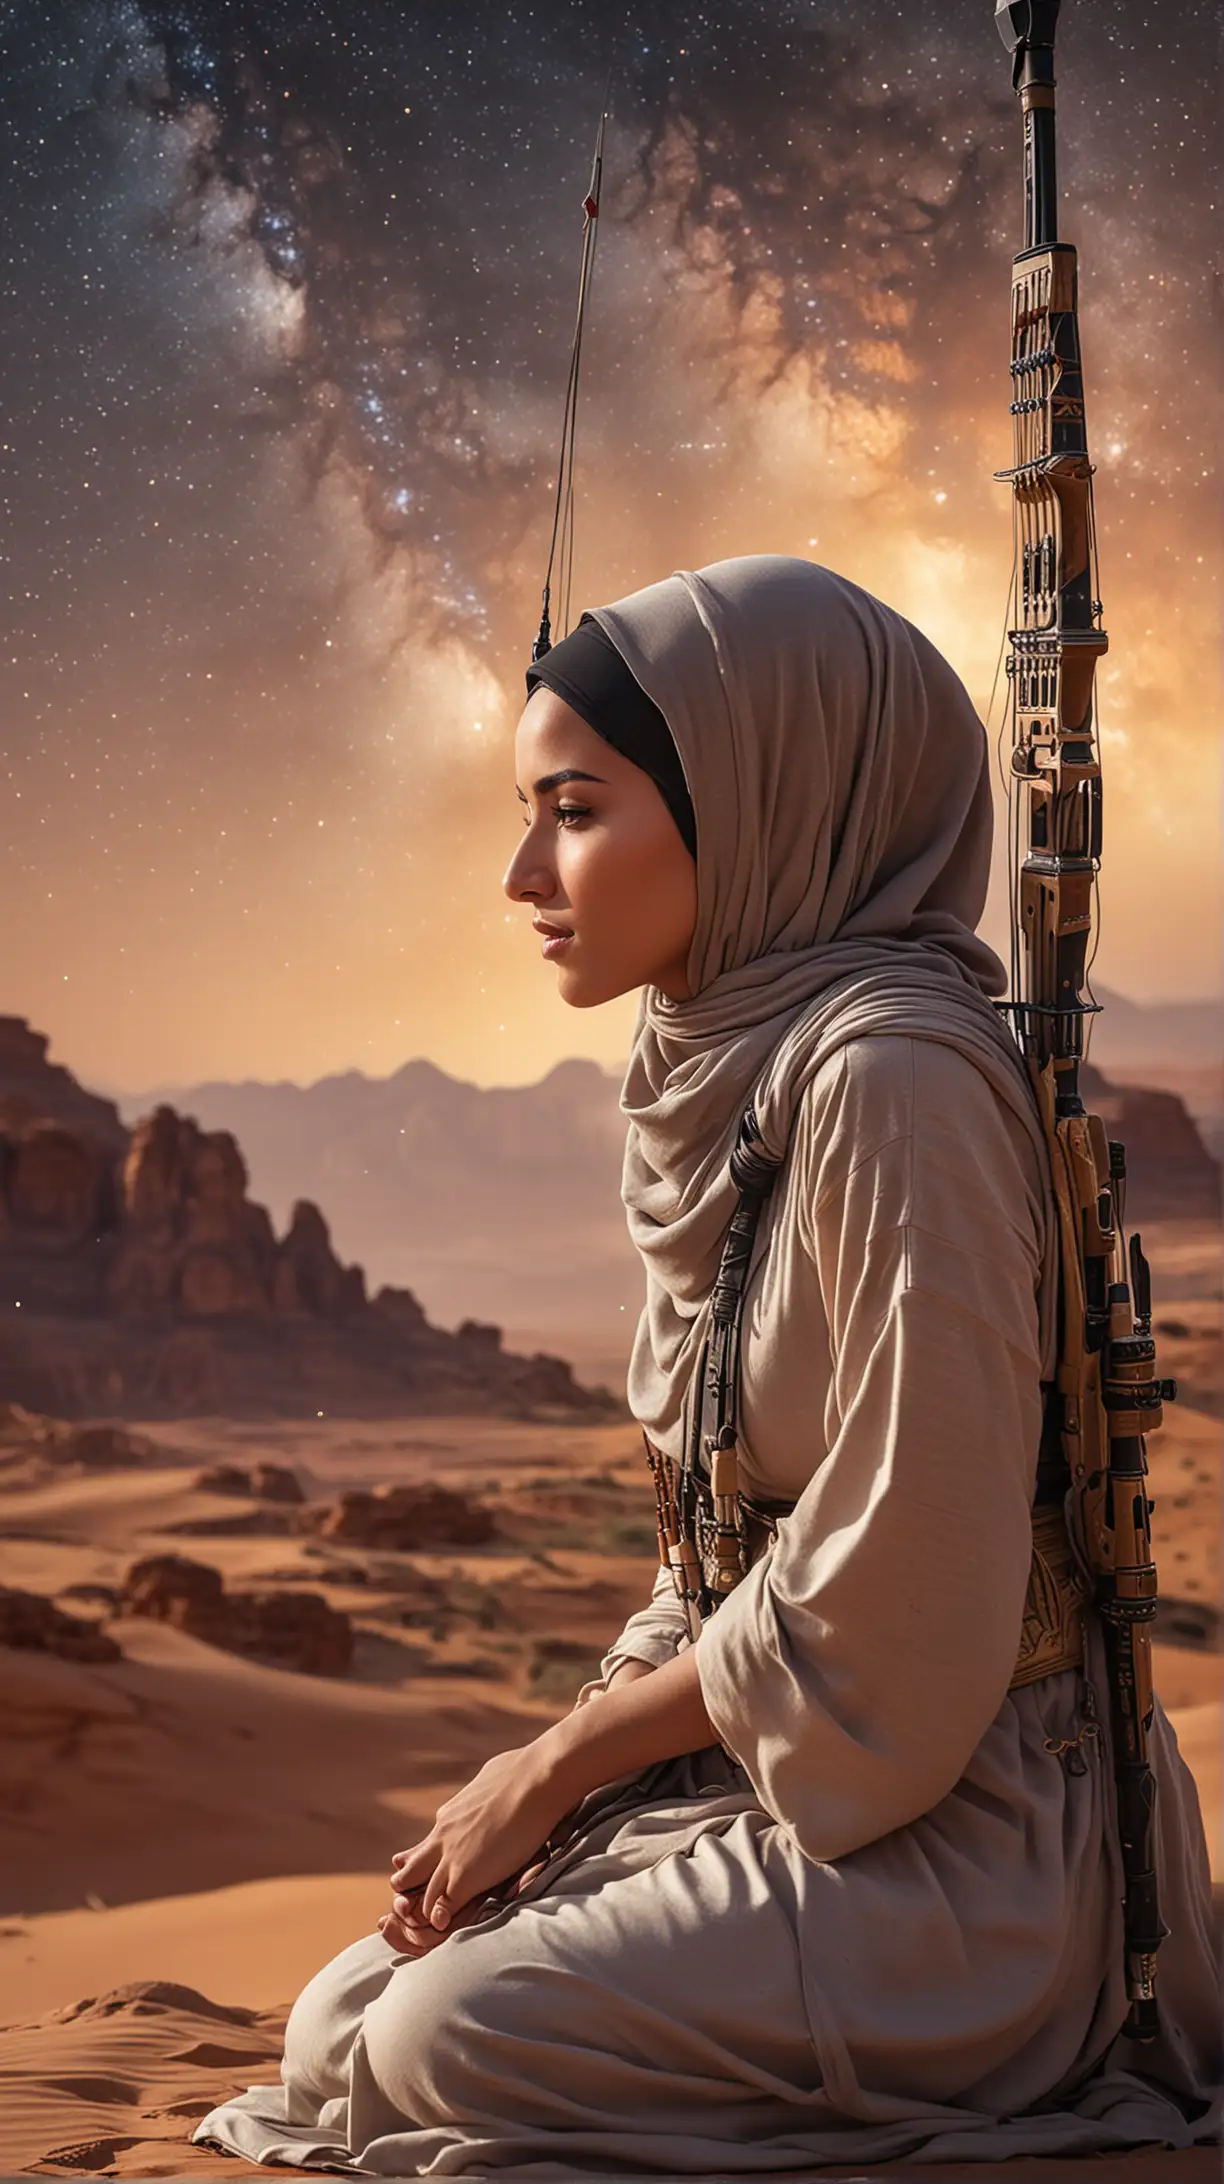 Graceful Arab Woman Praying with Archery in Desert Landscape